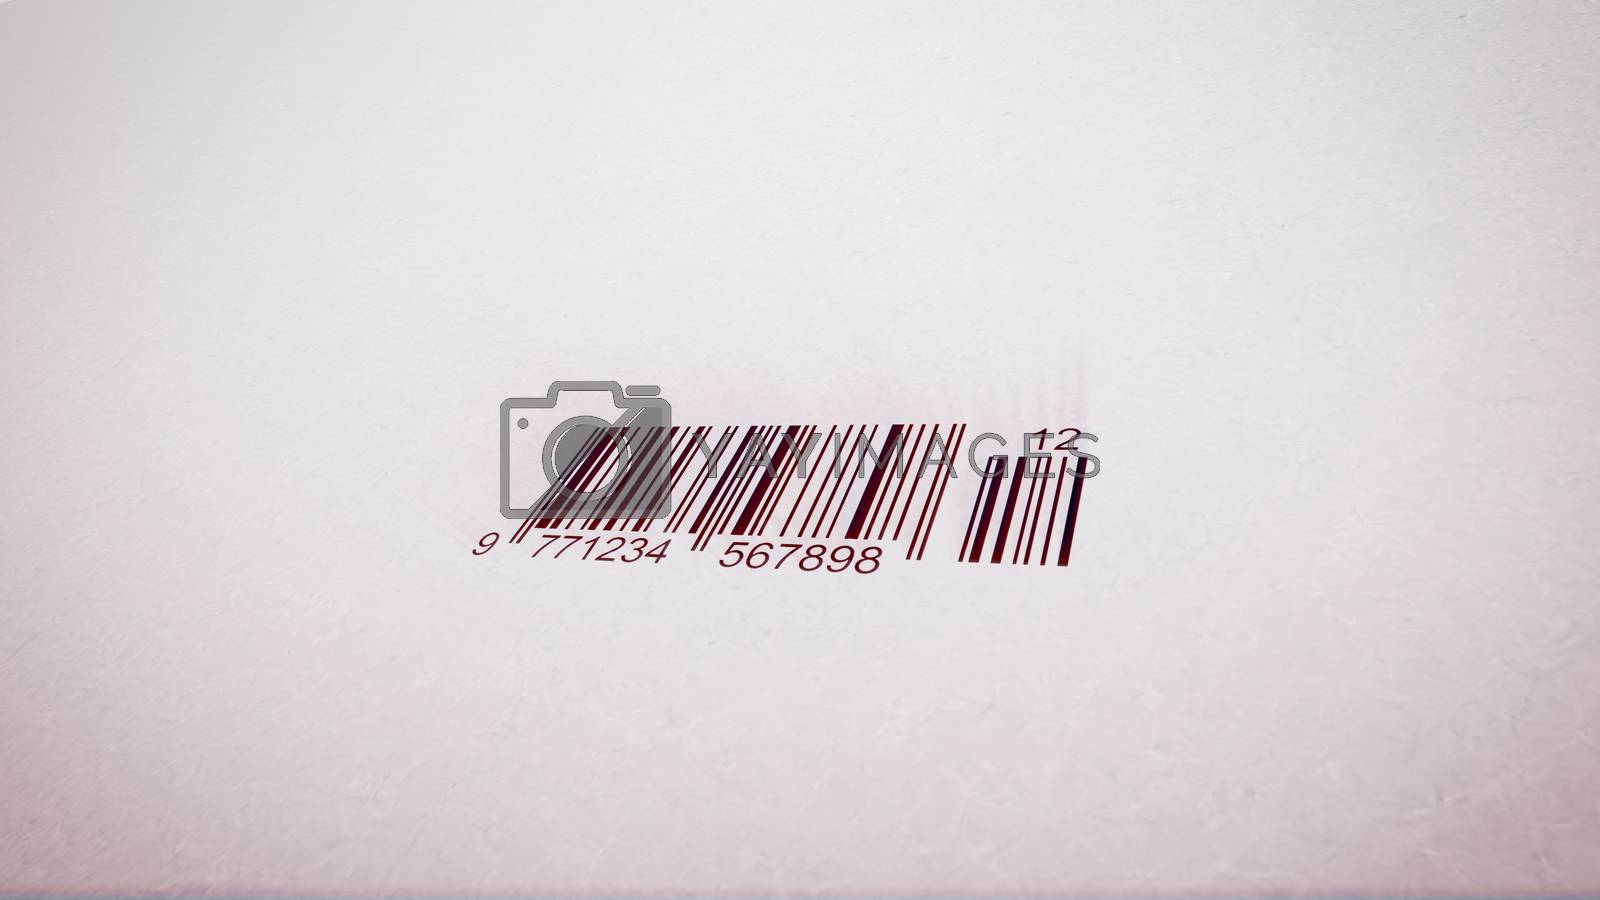 Royalty free image of Pop art Barcode scanner illustration by klss